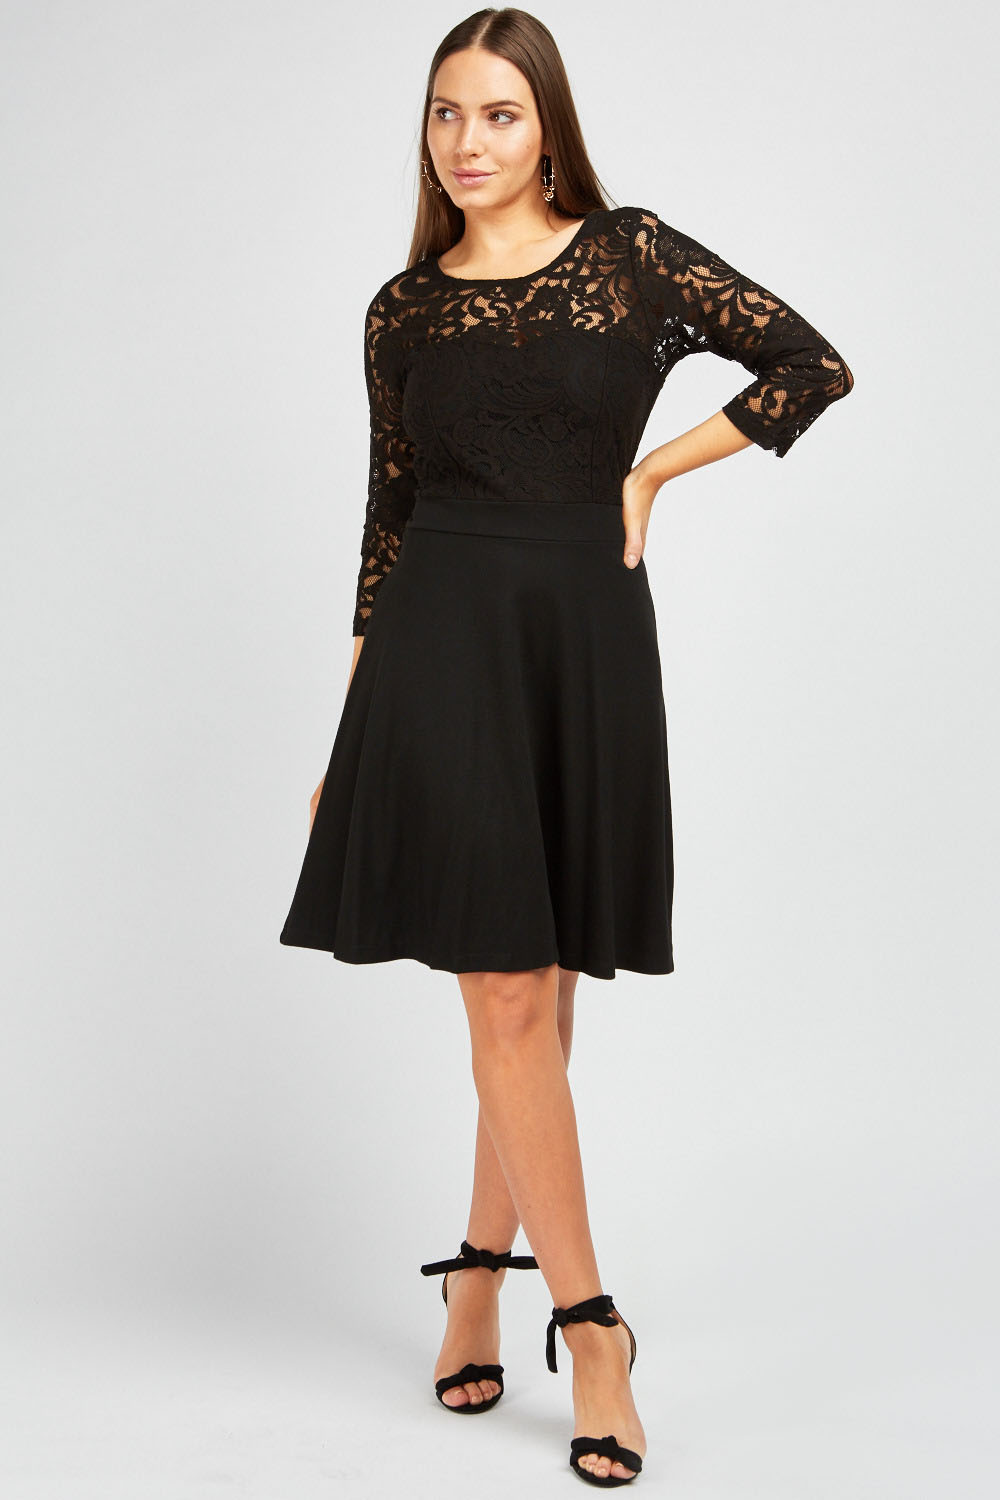 Lace Bodice Black Dress - Just $3